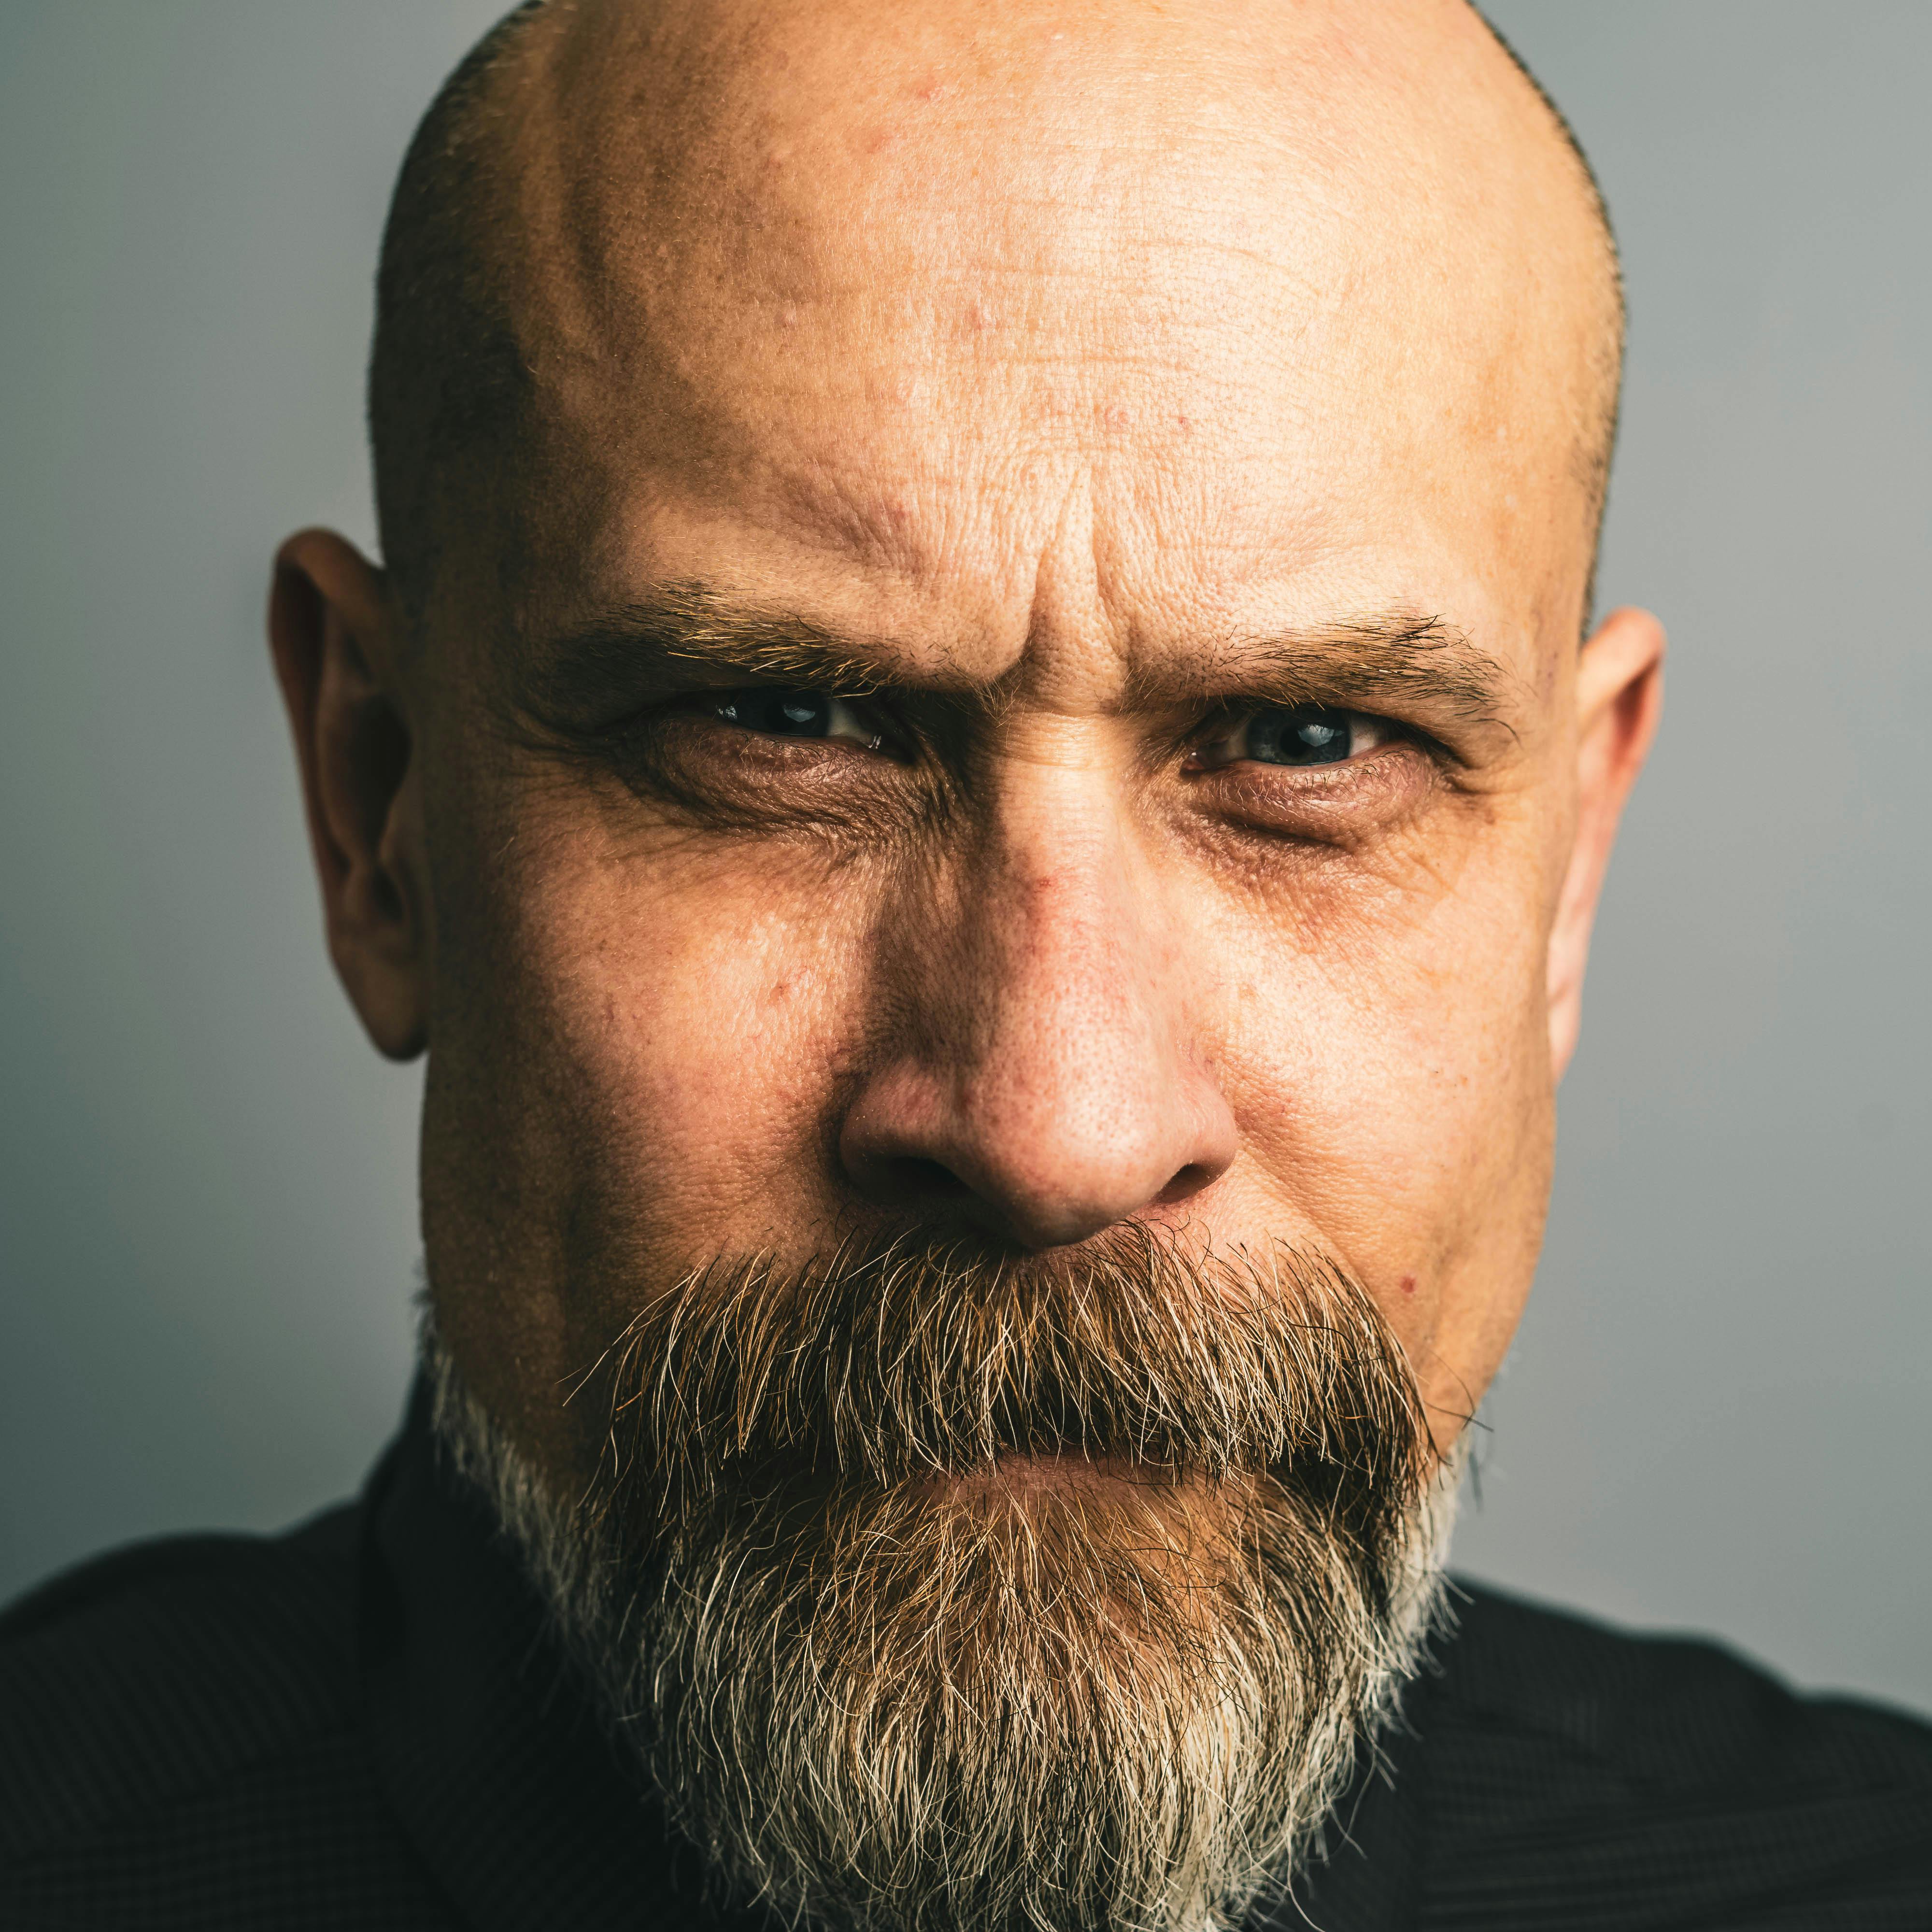 Bald man with a serious facial expression. | Photo: Pexels